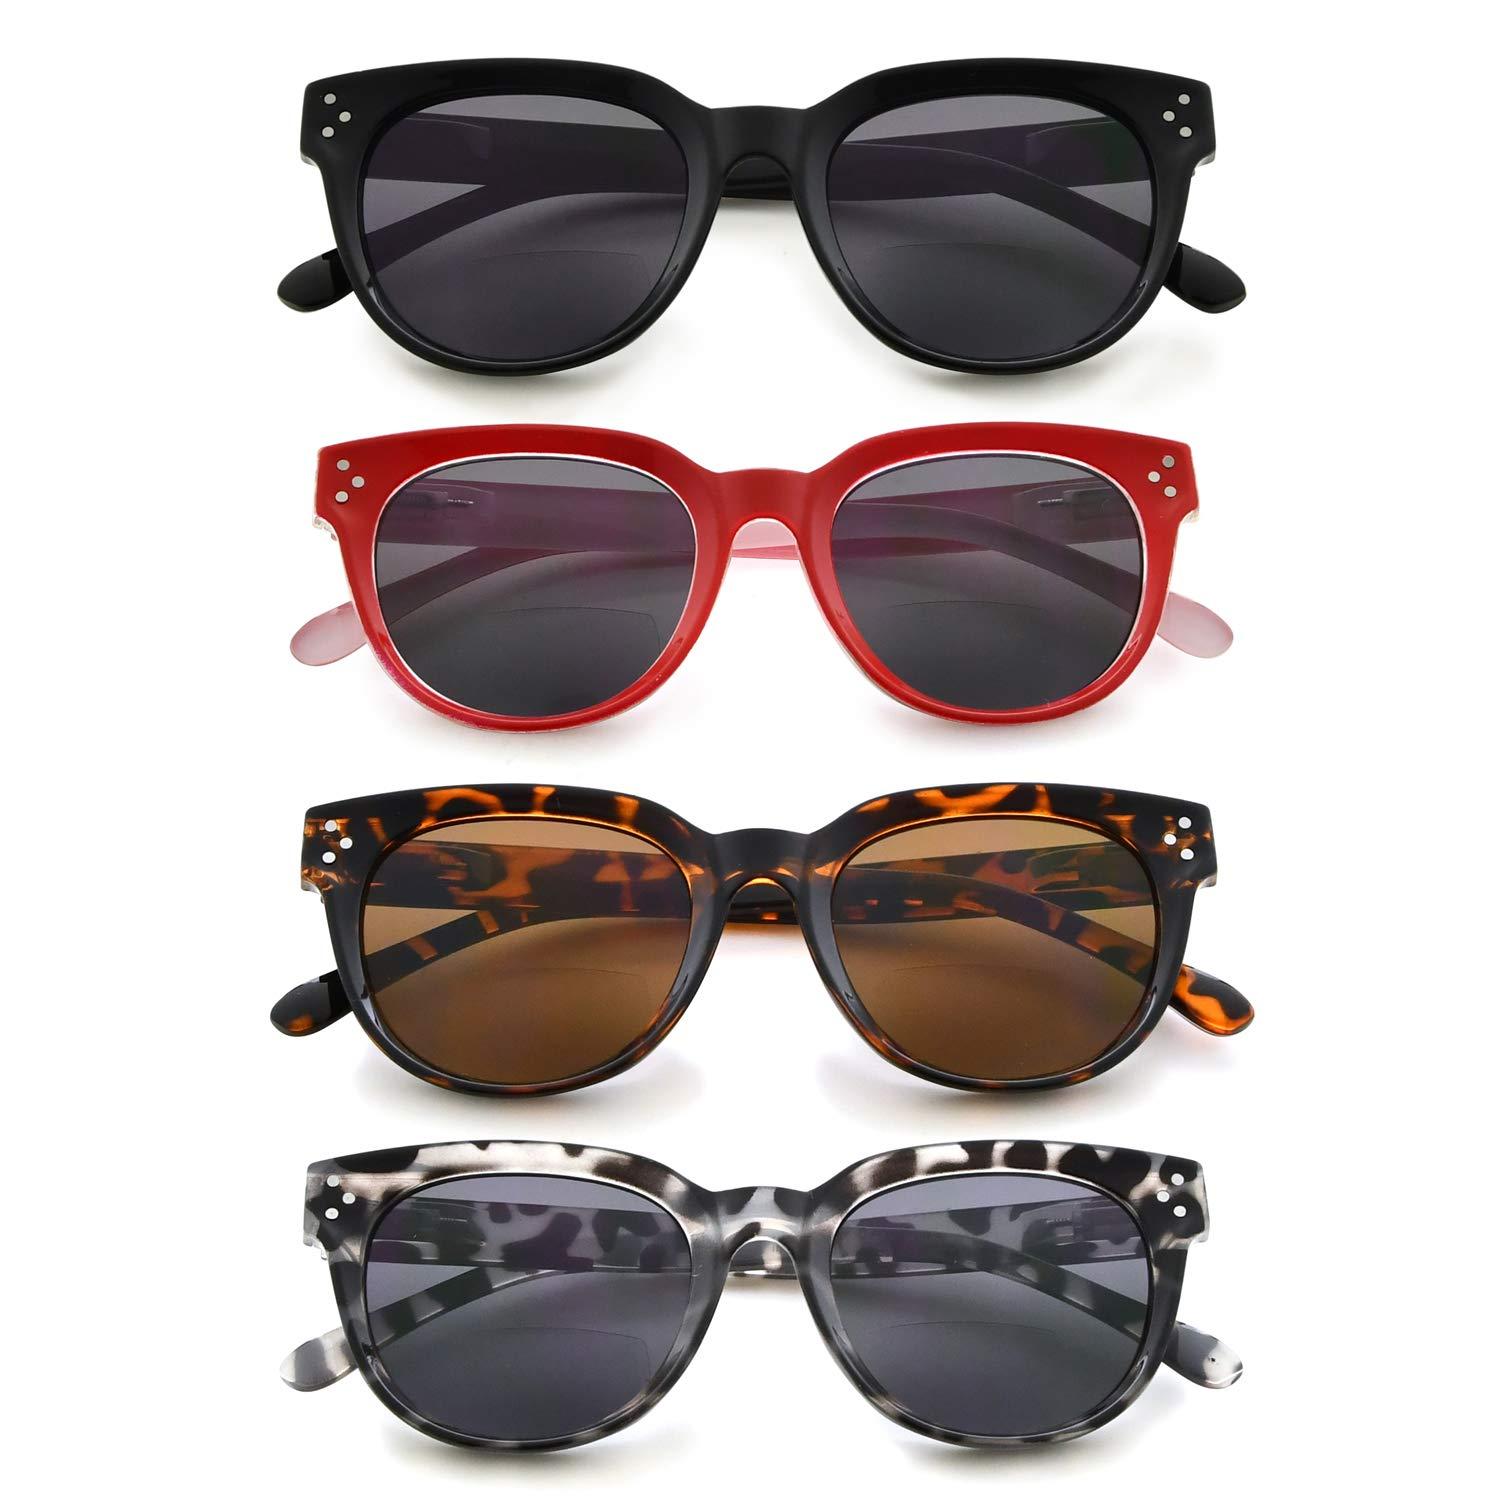 Eyekepper 4-packing Bifocal Glasses for Women Reading under the Sun Stylish Bifocal Readers Tinted Lens +2.00 5